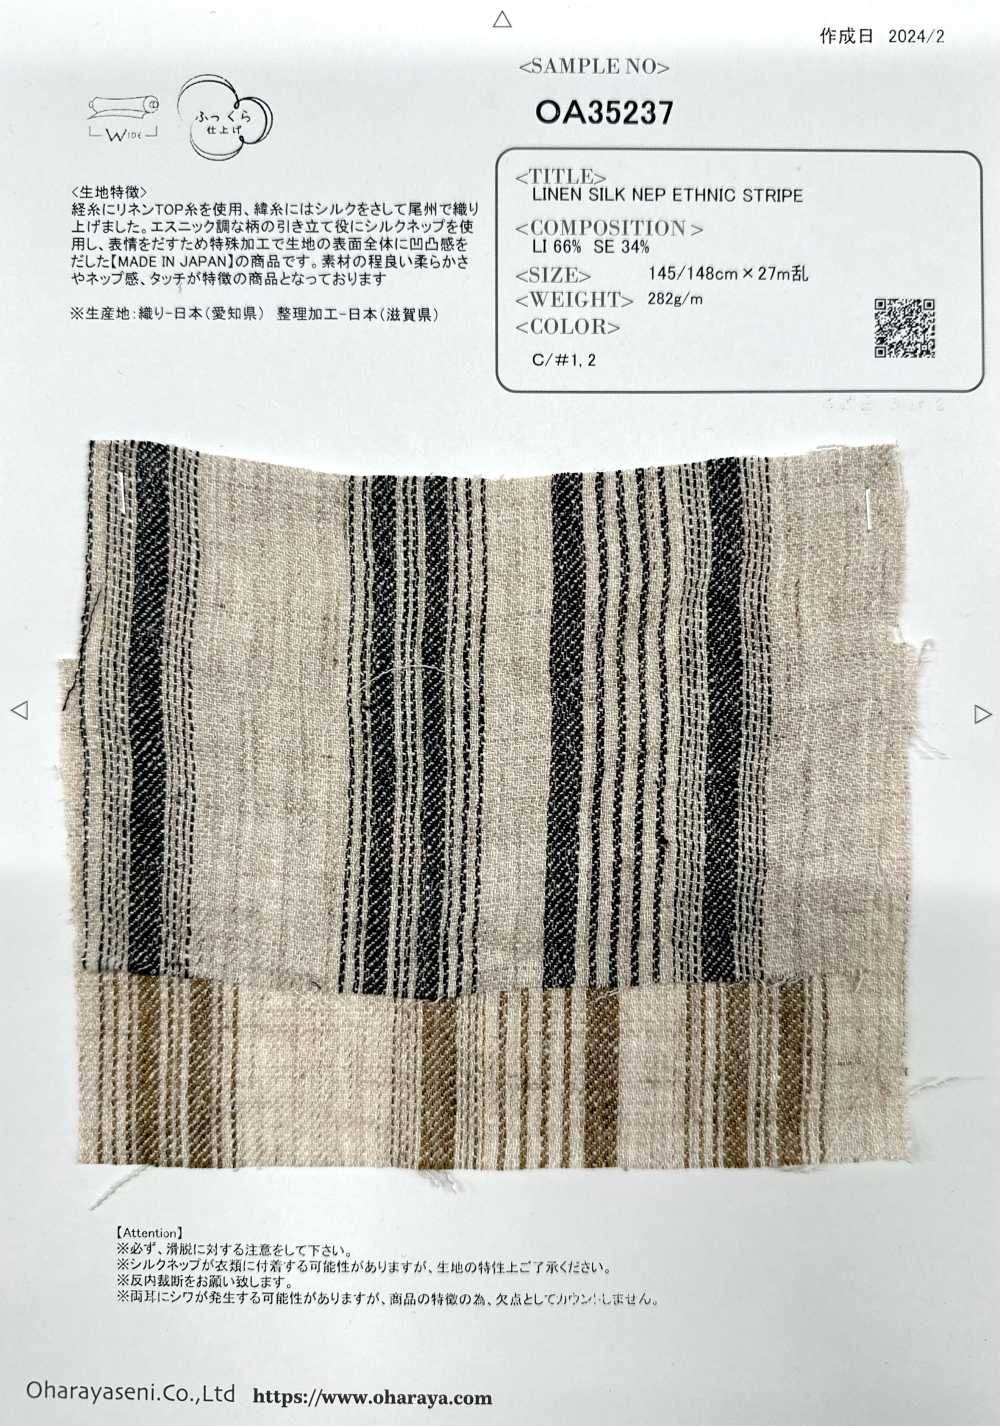 OA35237 Supima Cotton & French Linen × SILK 2/1 Super Twill Silky-Finish[Textile / Fabric] Oharayaseni